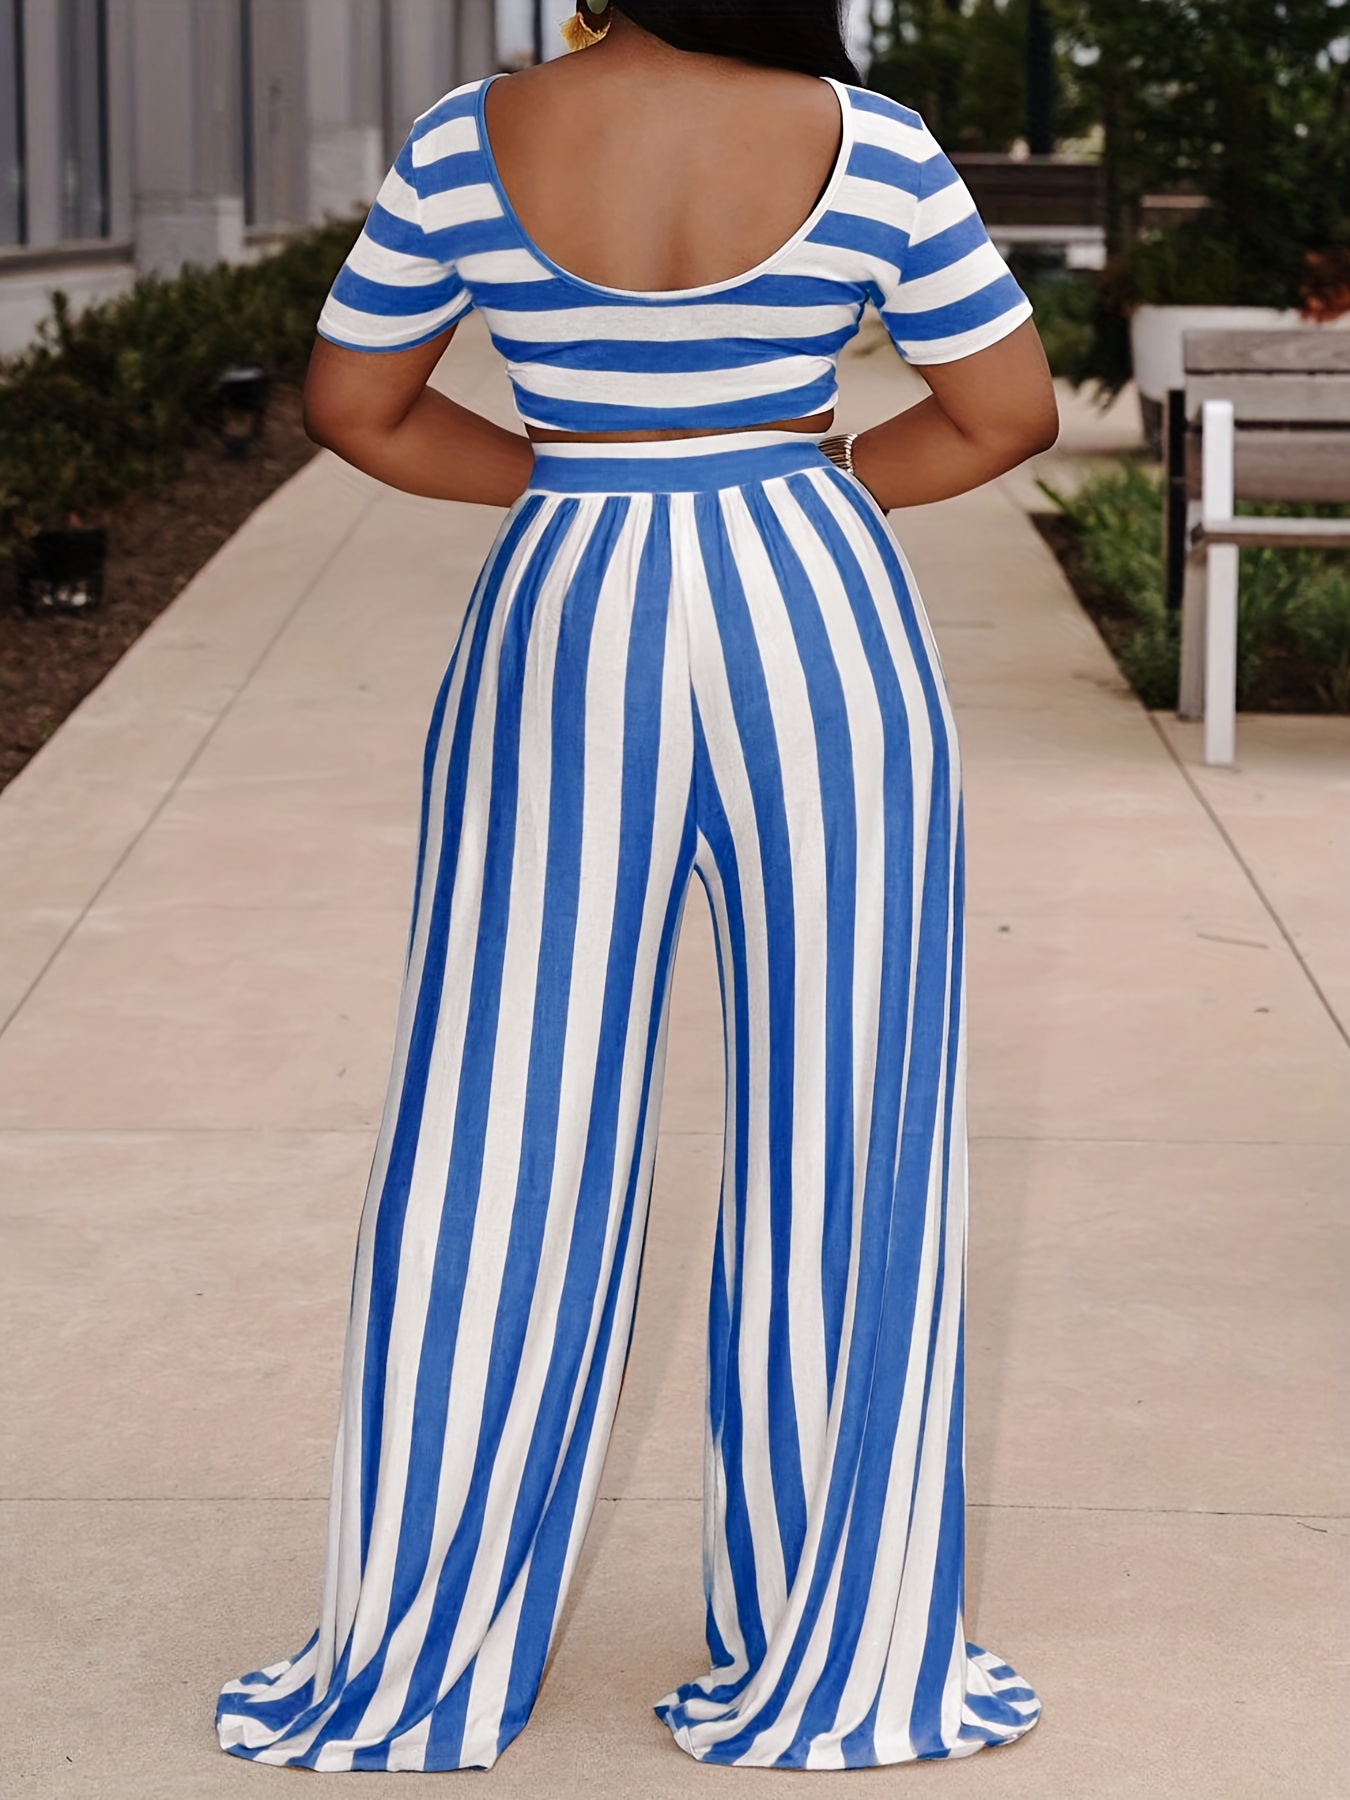 Women's Fashion Crop Top Stripe Wide-leg Pants Two-piece Set Casual Summer